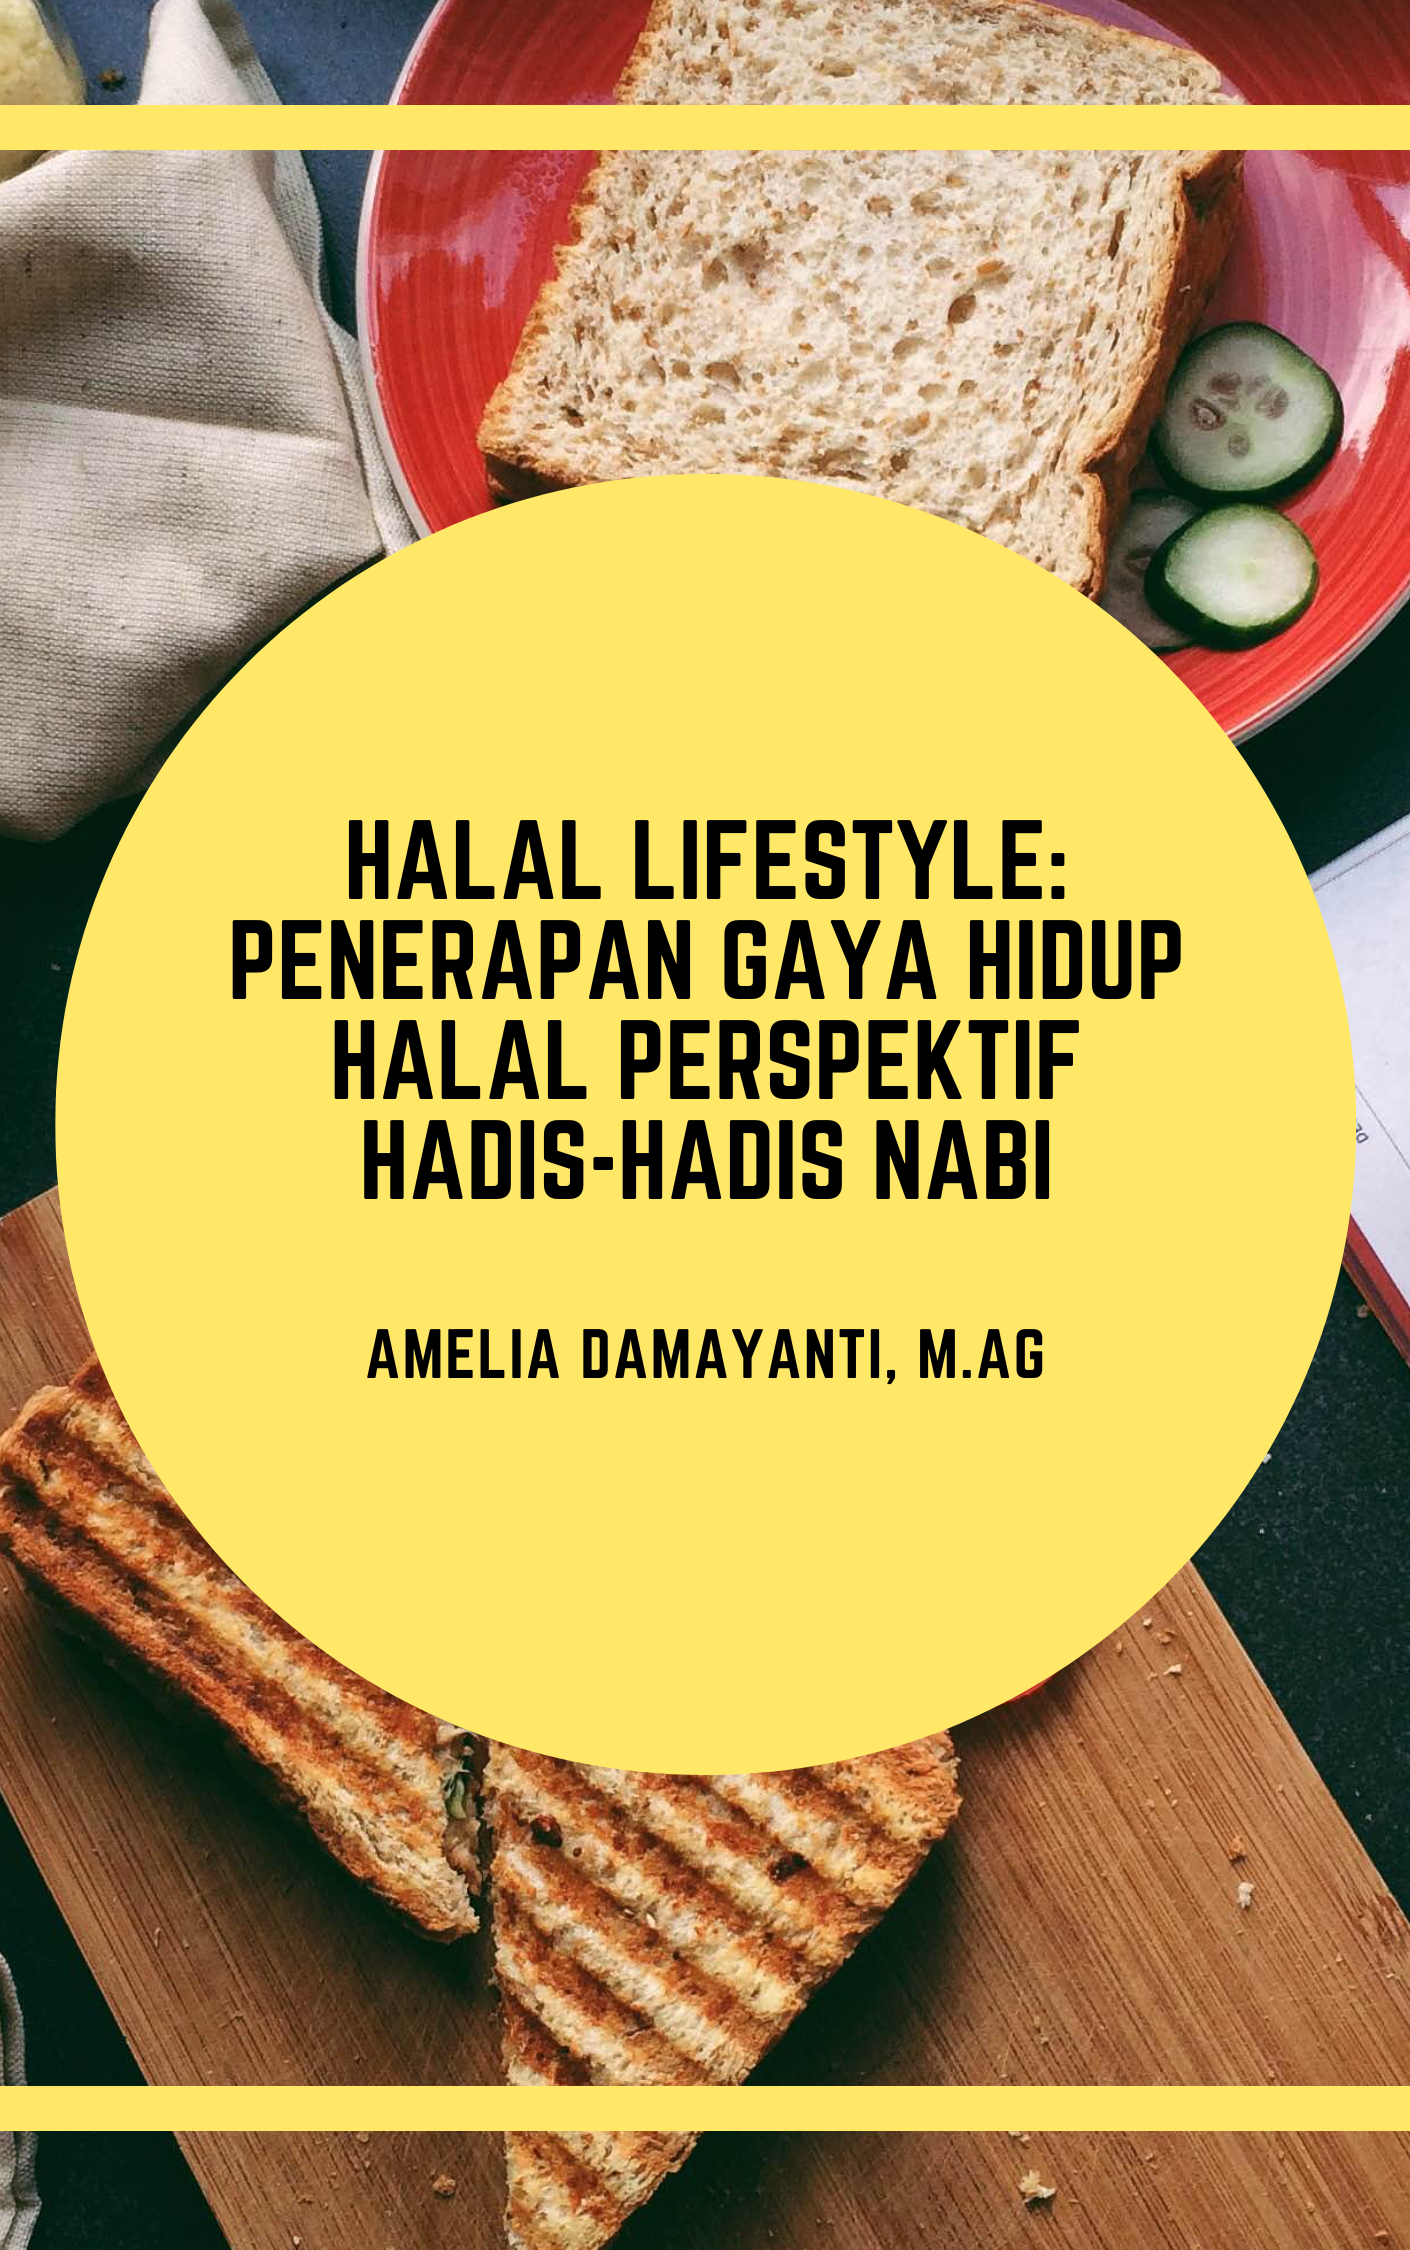 Halal Lifestyle Penerapan Gaya Hidup Halal Perspektif Hadis-Hadis Nabi